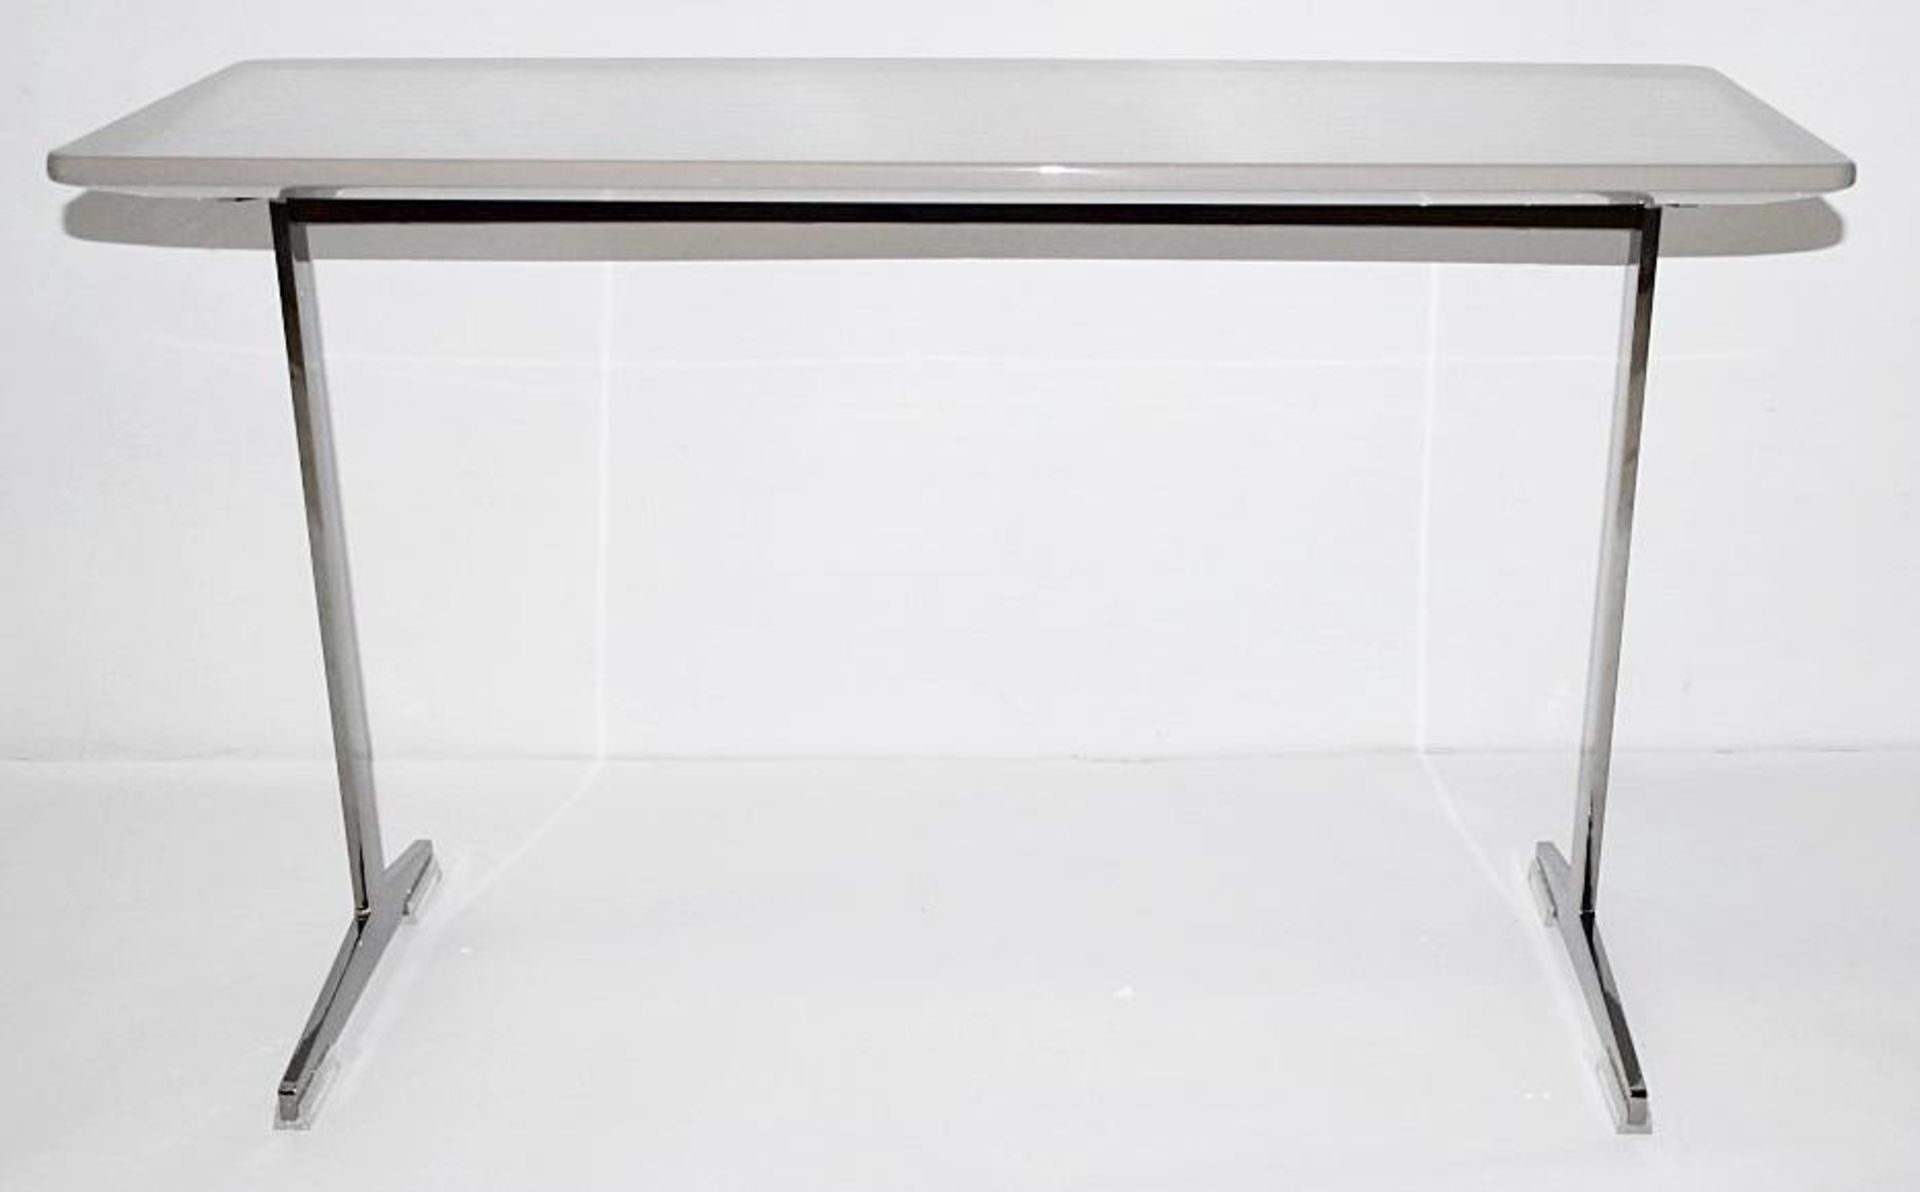 1 x FLEXFORM 'Cestone' Italian Made Designer Slot-In Sidetable In Dove Grey & Chrome - RRP £1,573 - Image 8 of 8